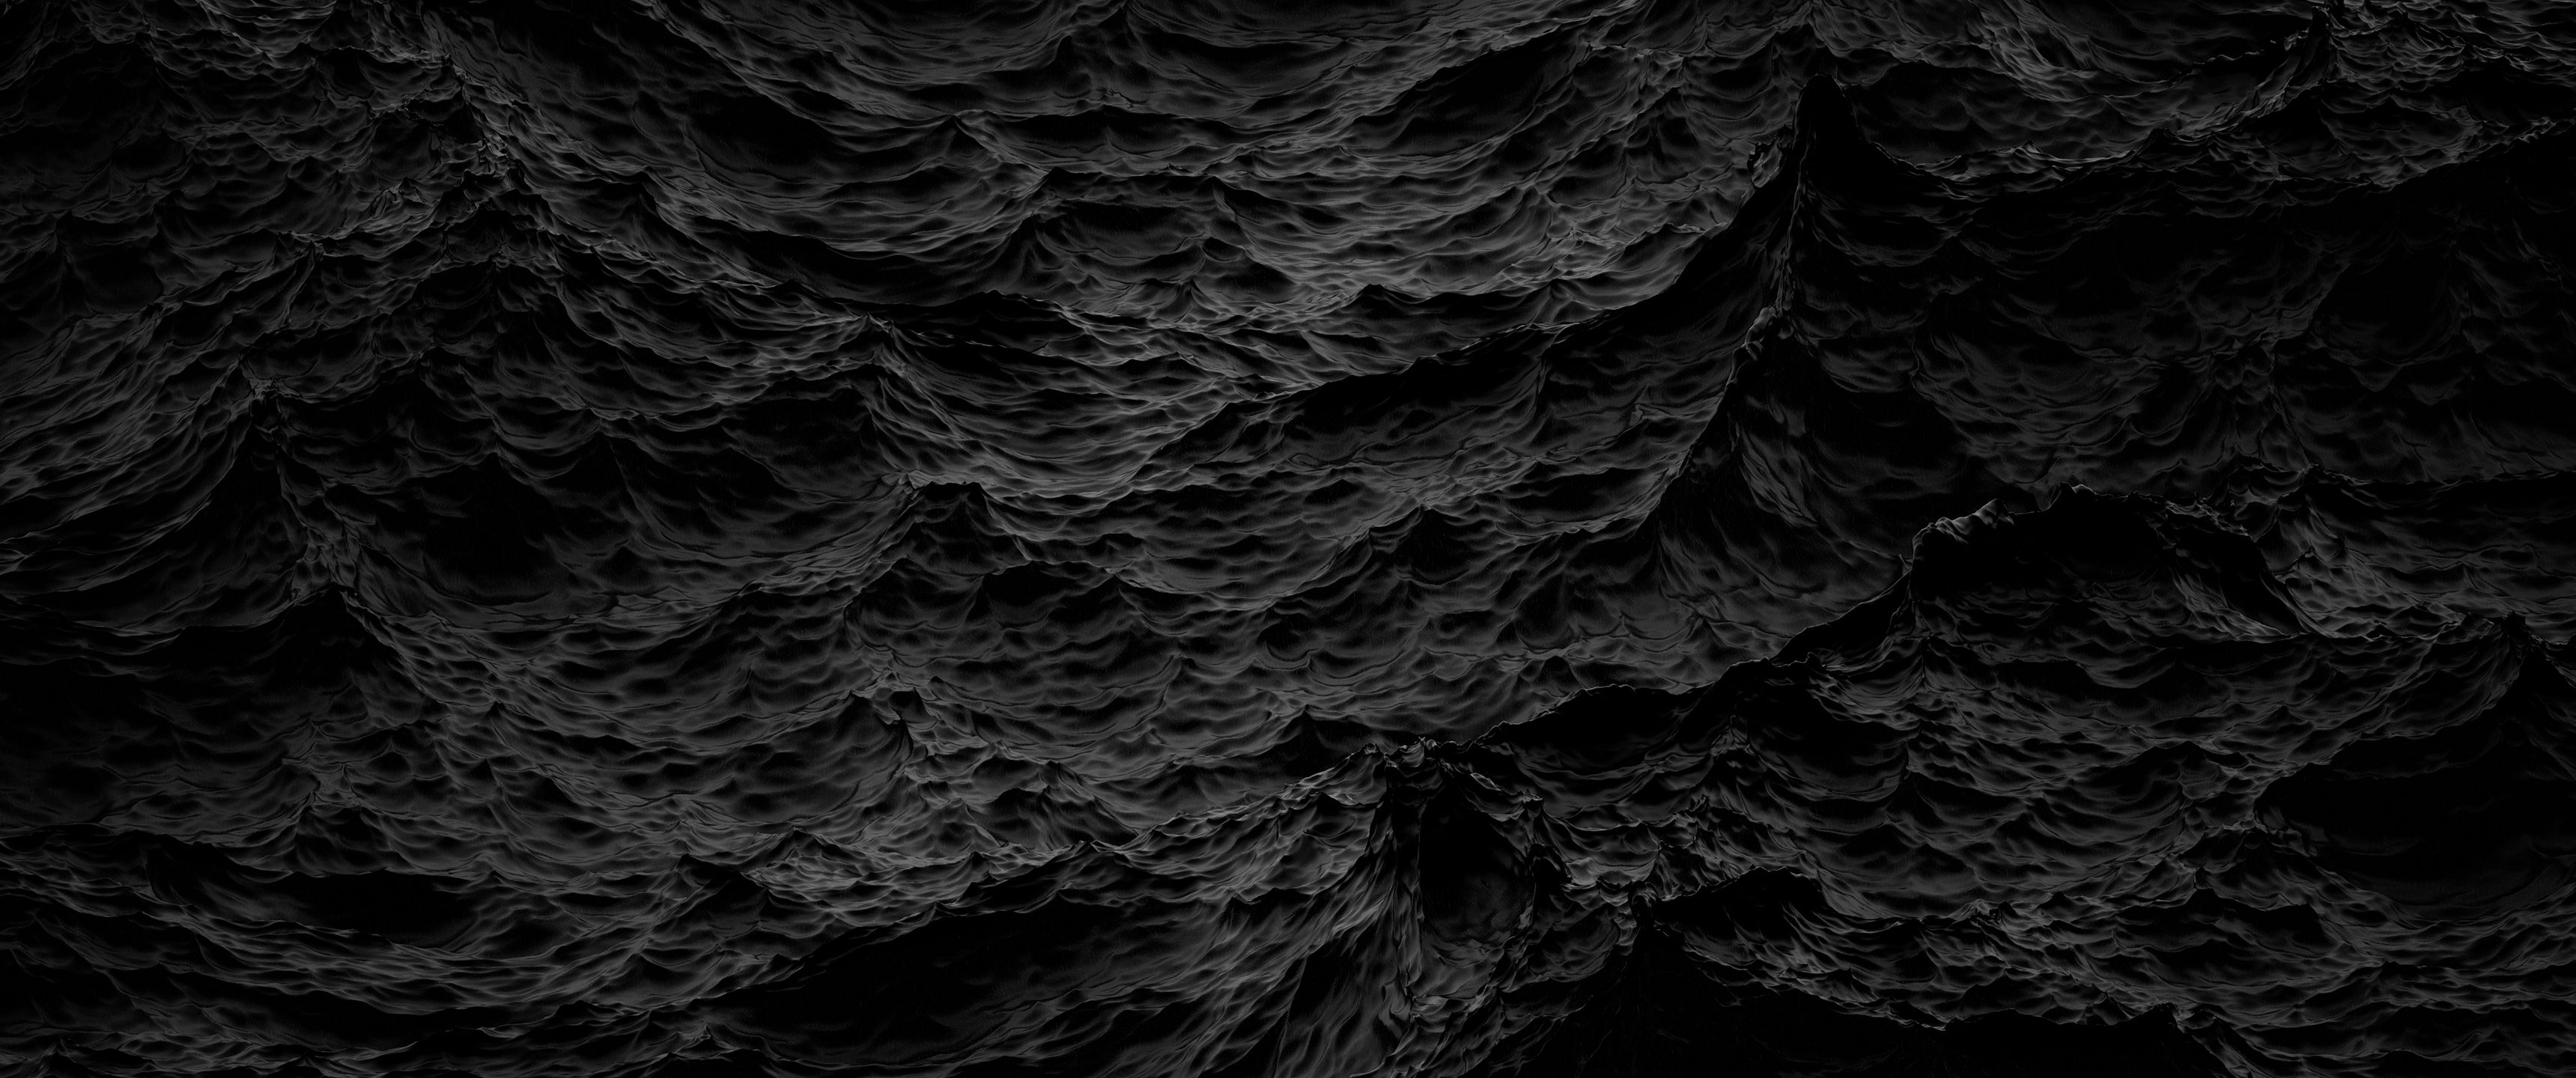 Black ocean ultrawide wallpaper